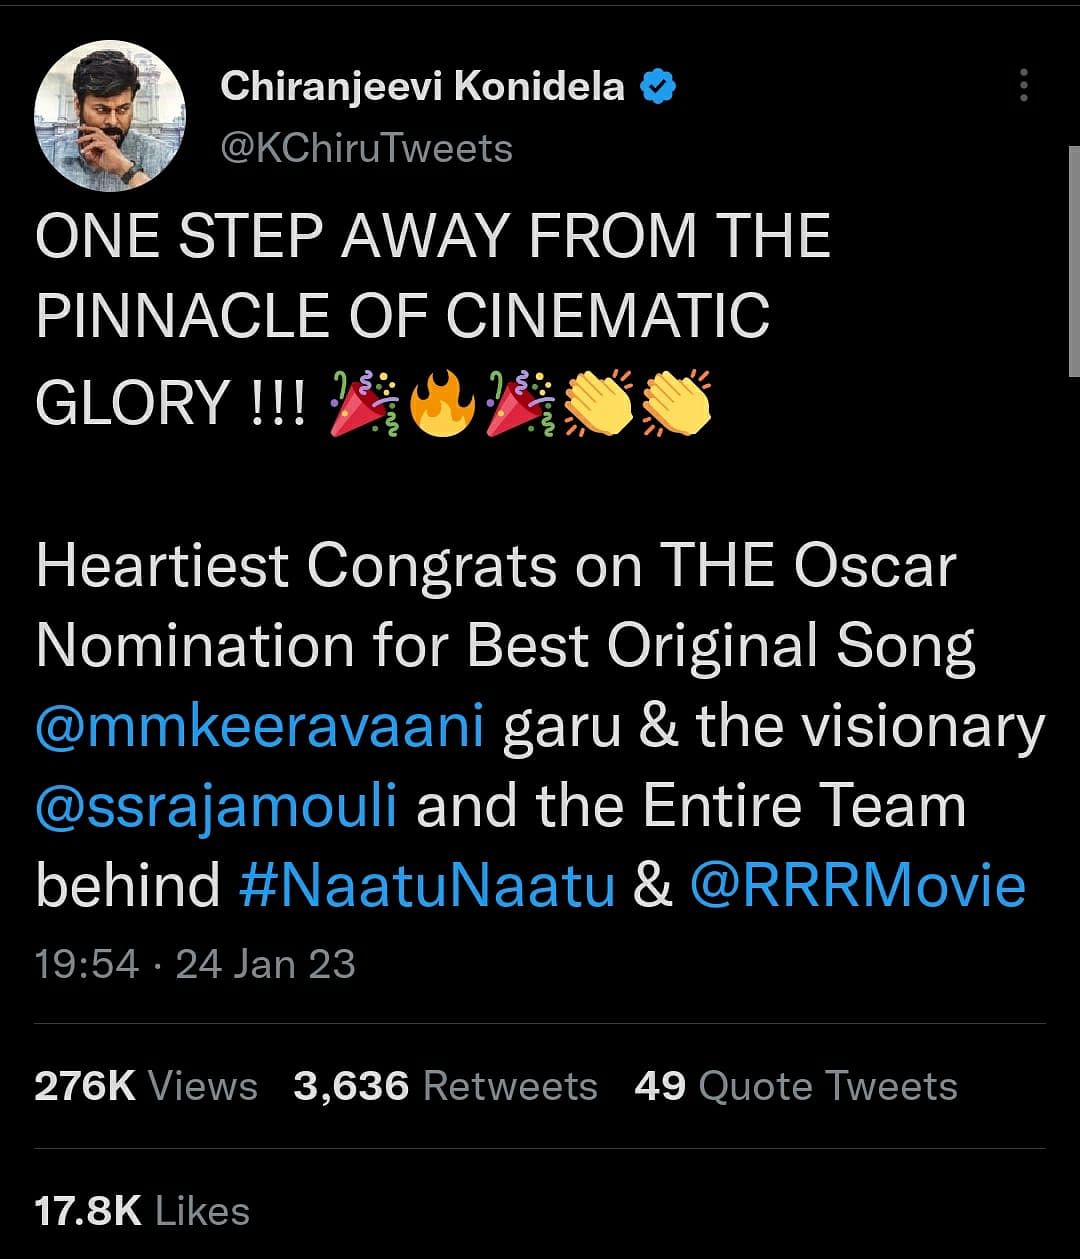 The song 'Naatu Naatu' won a Golden Globe under the 'Best Original Song' category.